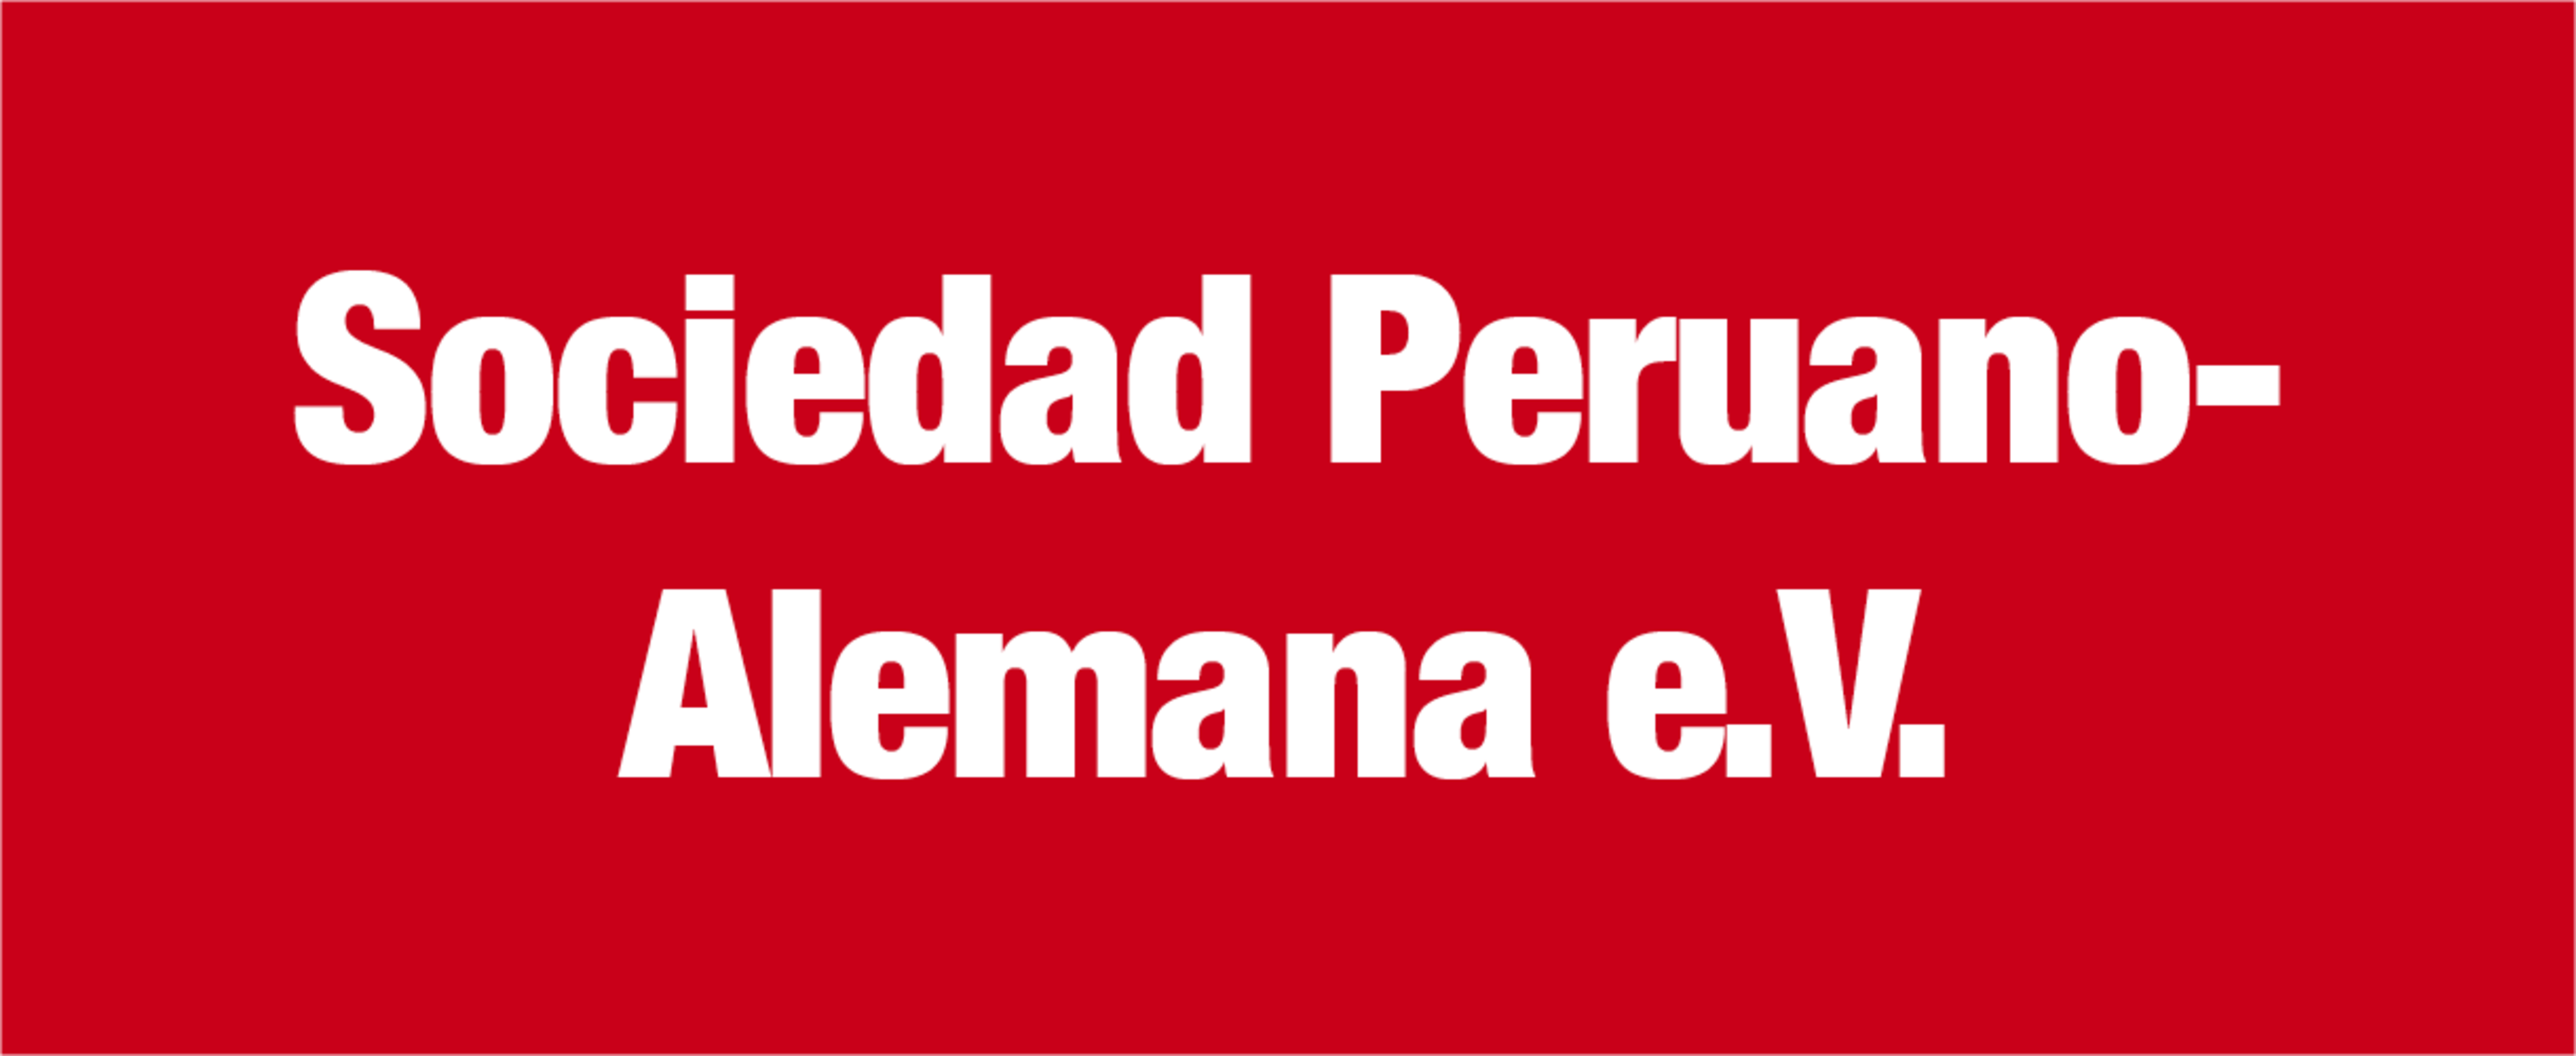 Sociedad Peruano-Alemana e.V.